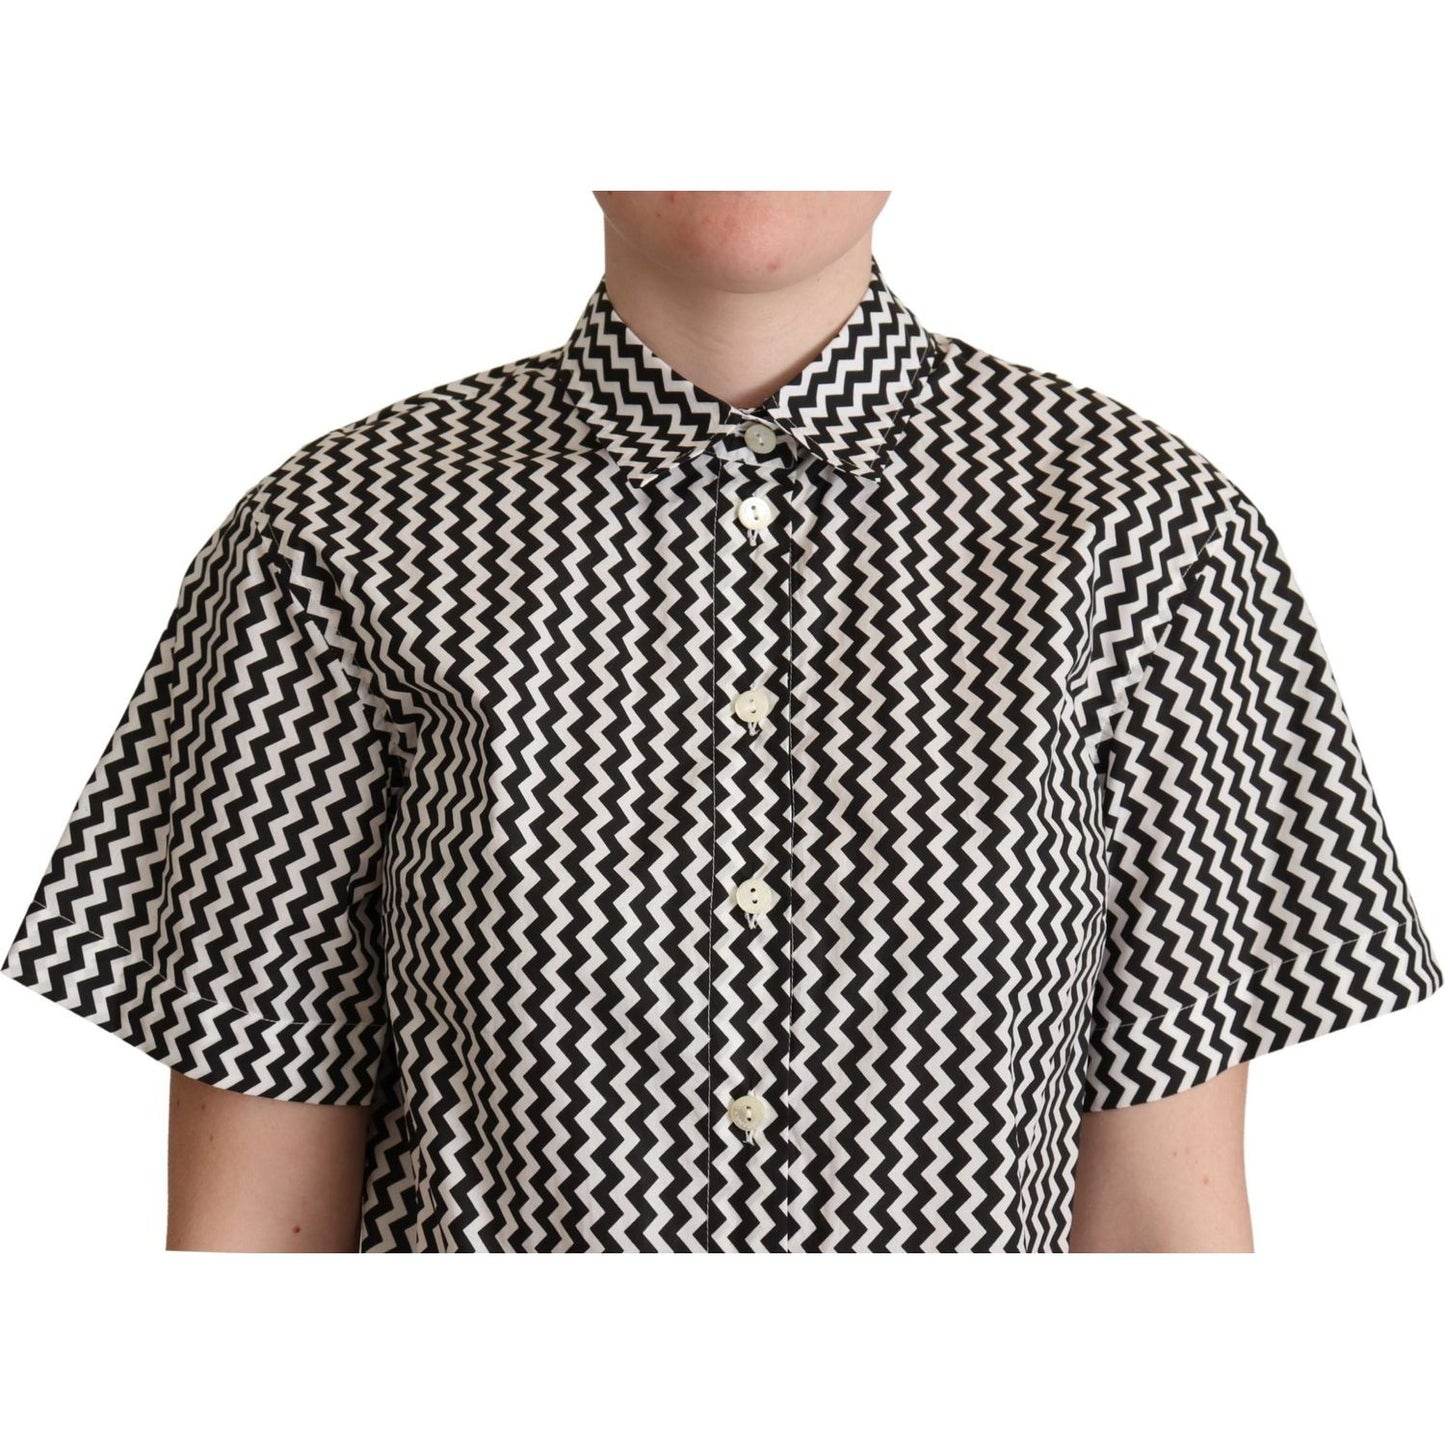 Dolce & Gabbana Zigzag Elegance Cotton Polo Top Blouse Top black-white-zigzag-collar-cotton-top-shirt